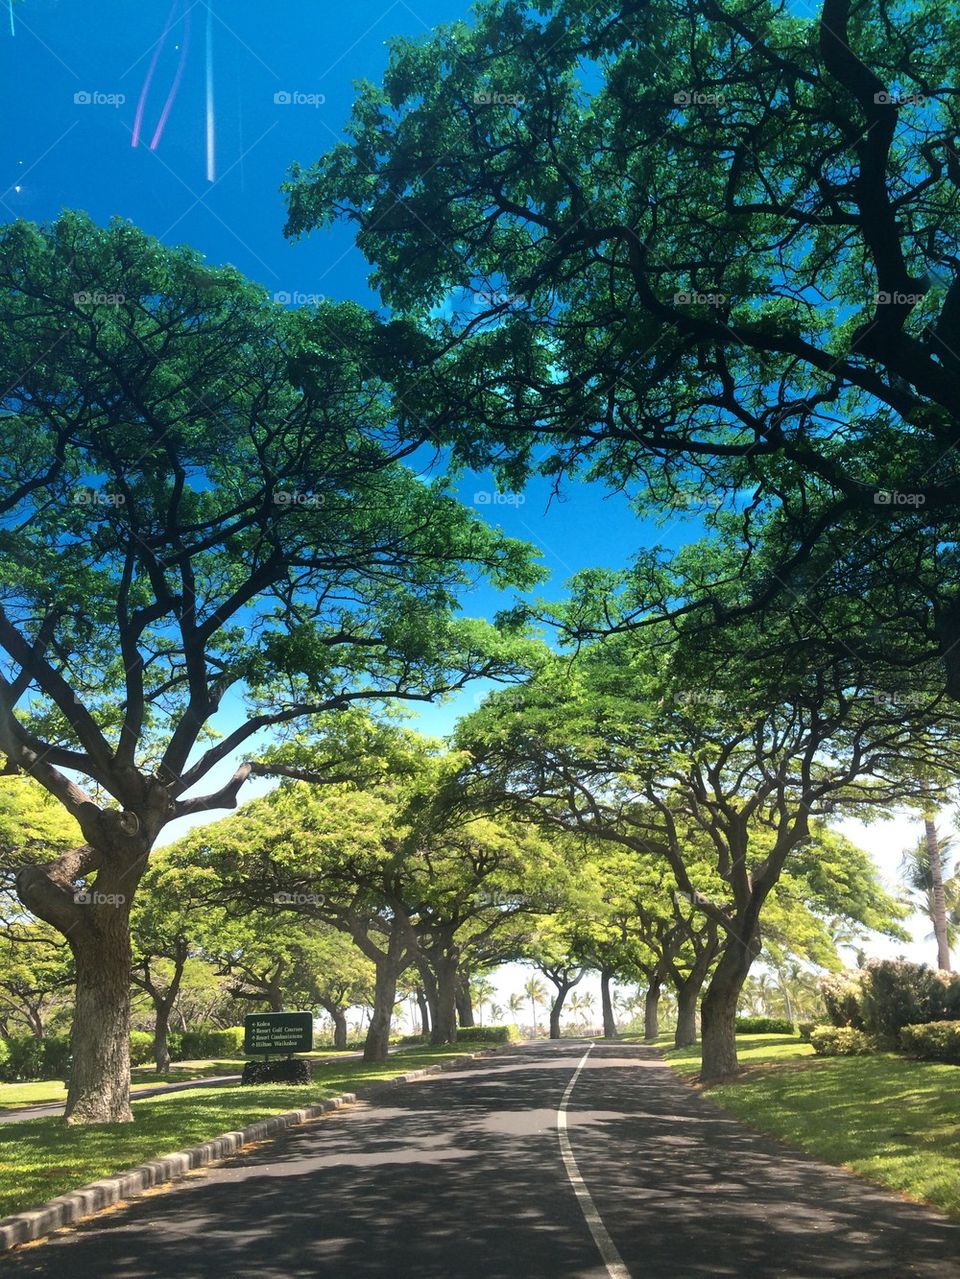 Tree covered road. Mauna Kea resort